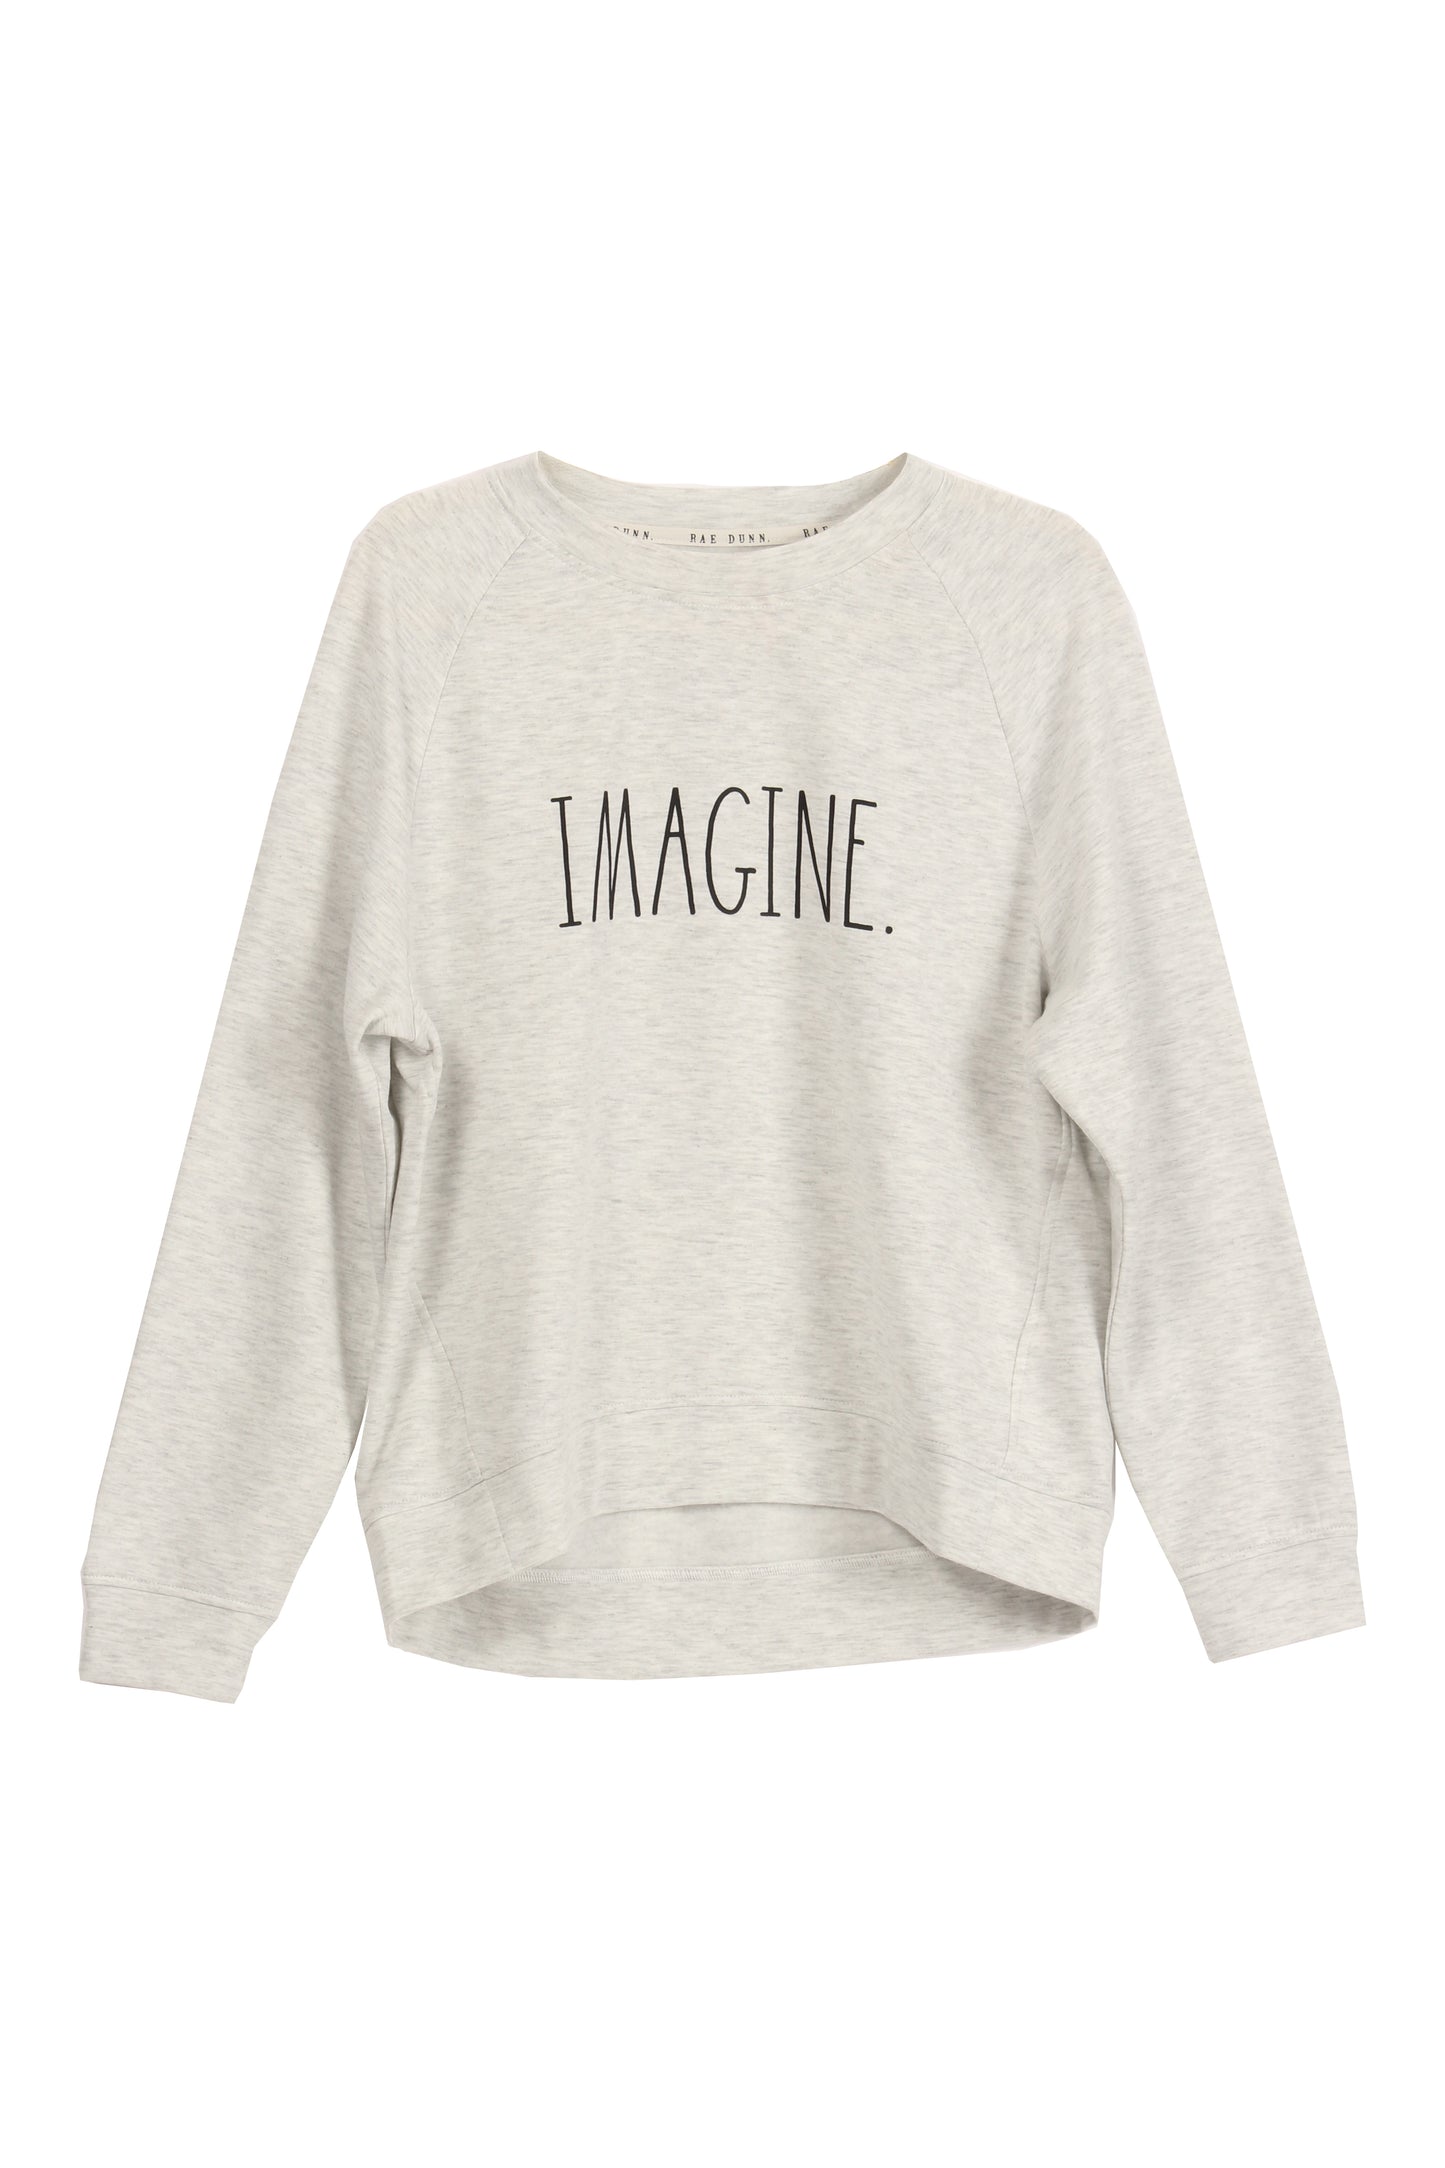 Women's "IMAGINE" Studio Raglan Sweatshirt - Shop Rae Dunn Apparel and Sleepwear